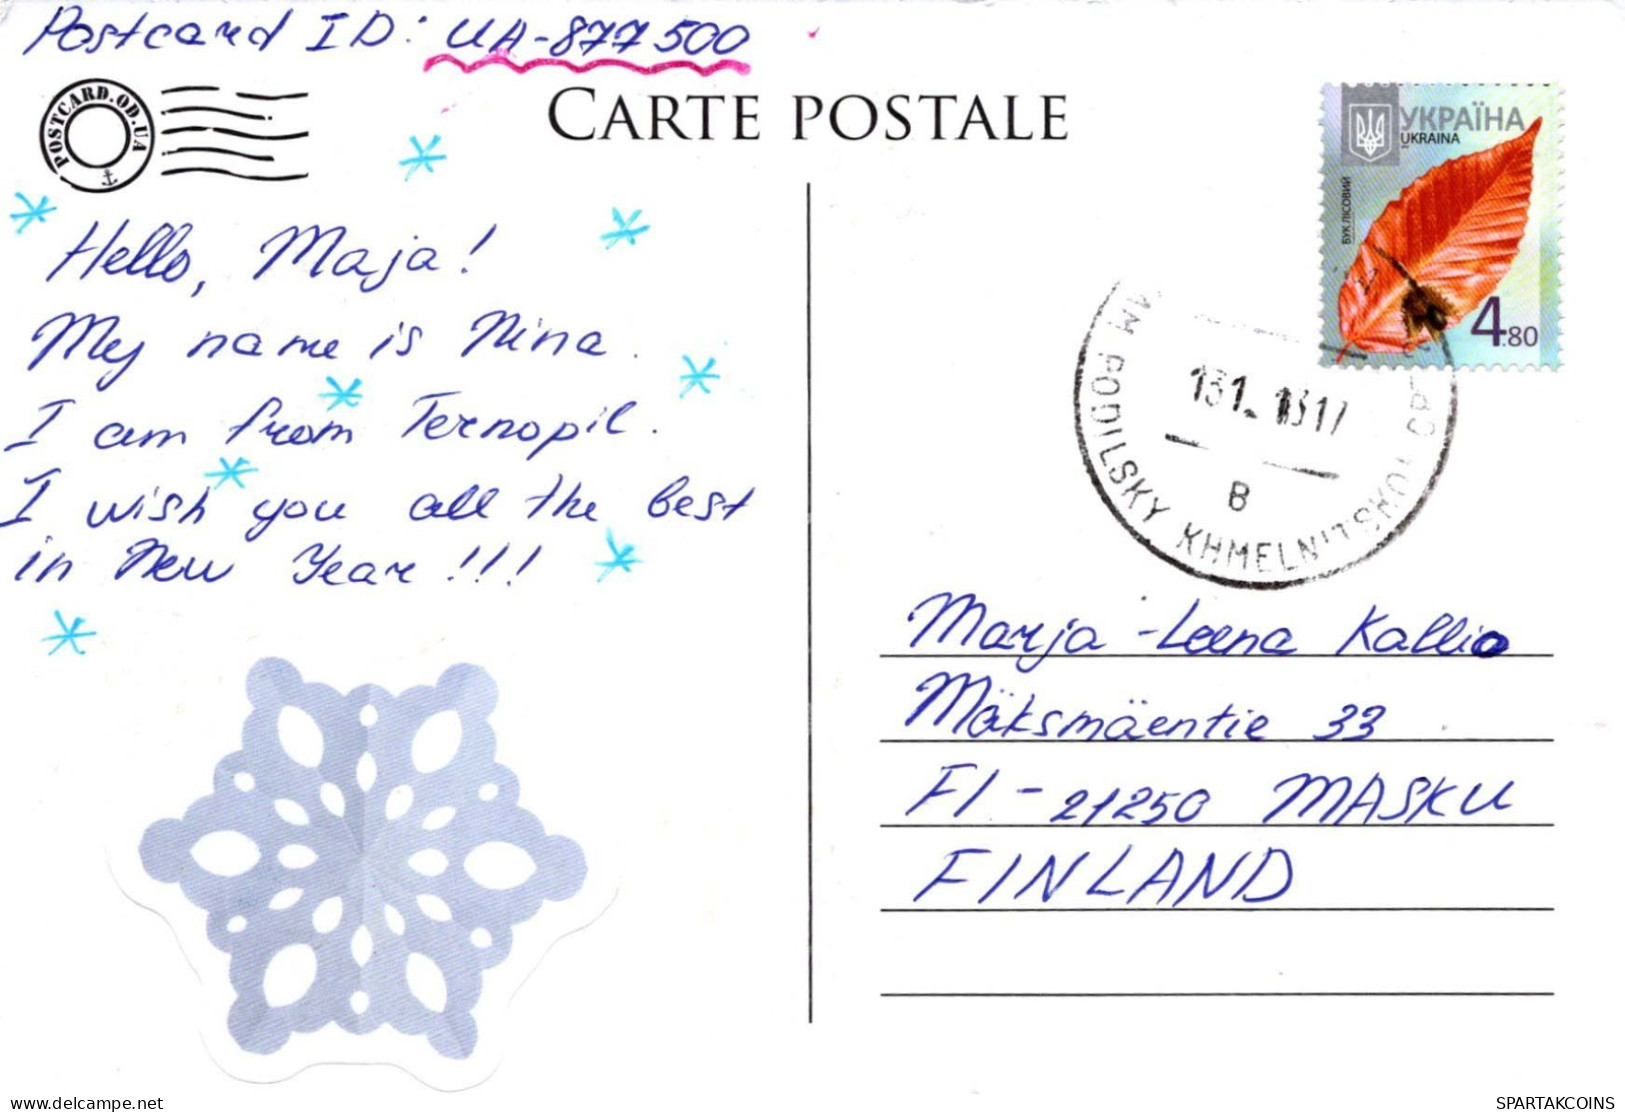 Buon Anno Natale BAMBINO Vintage Cartolina CPSM #PBM282.IT - New Year